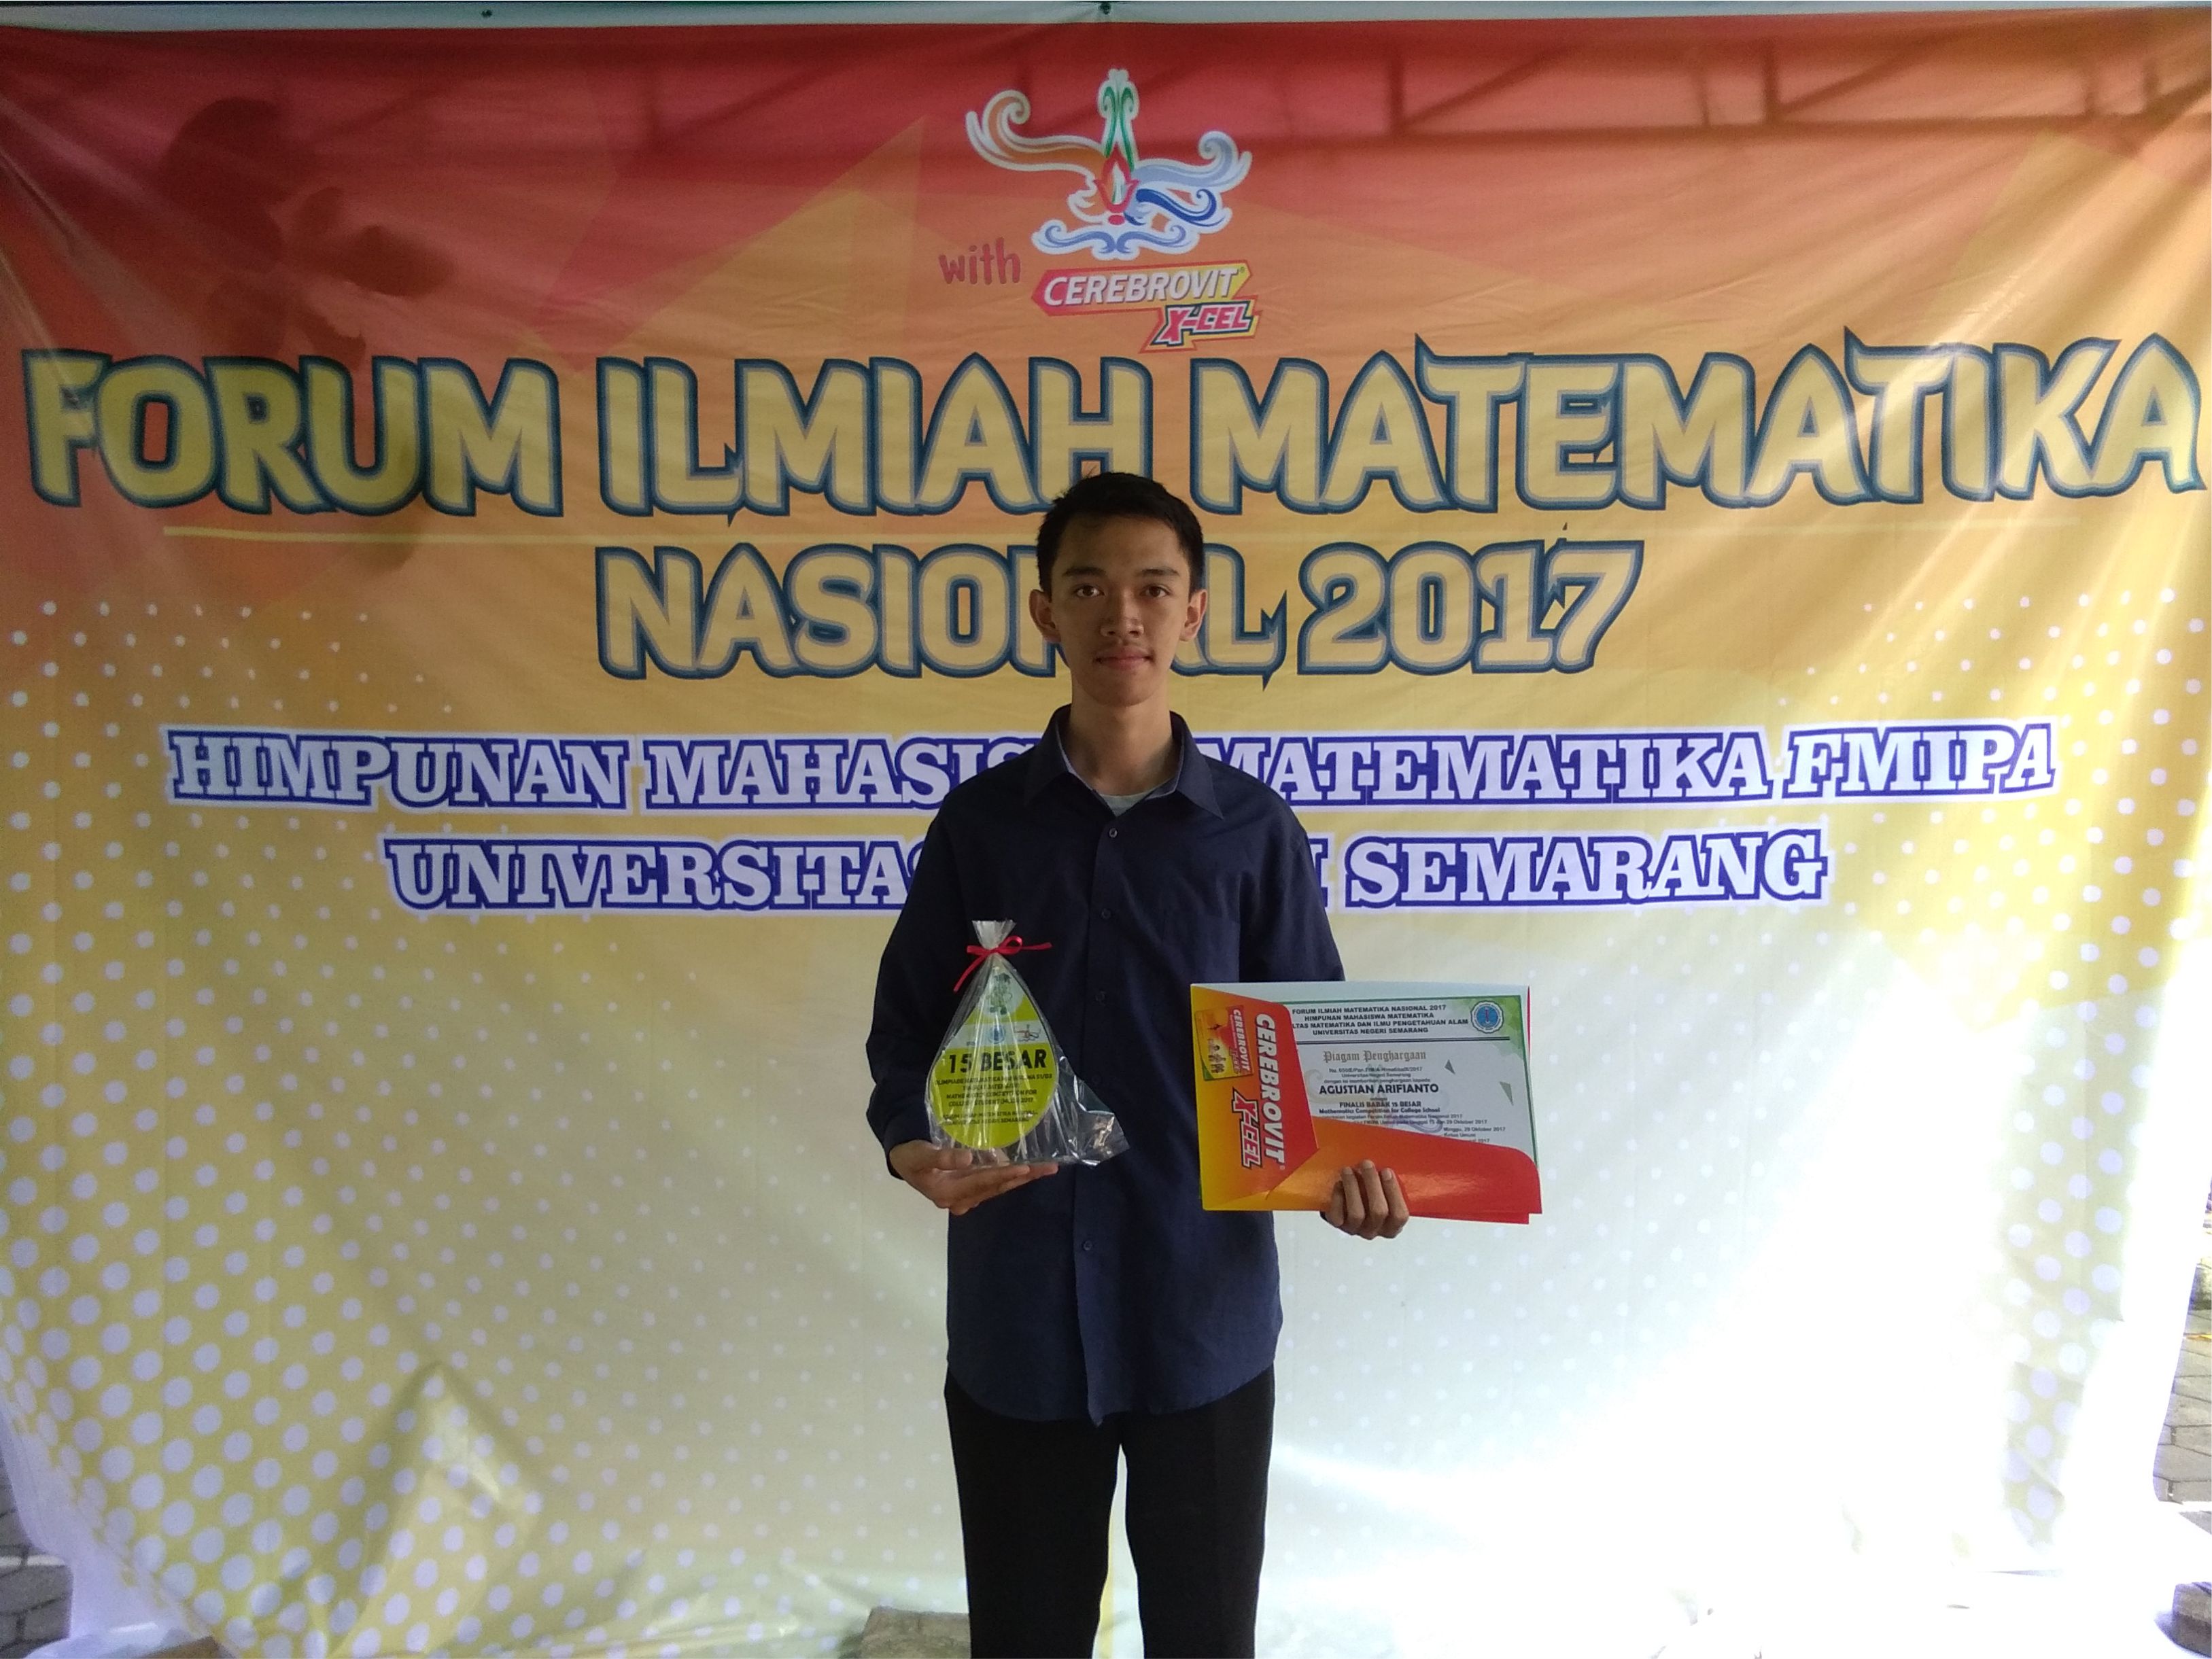 Foto Forum Ilmiah Matematika Nasional 2017